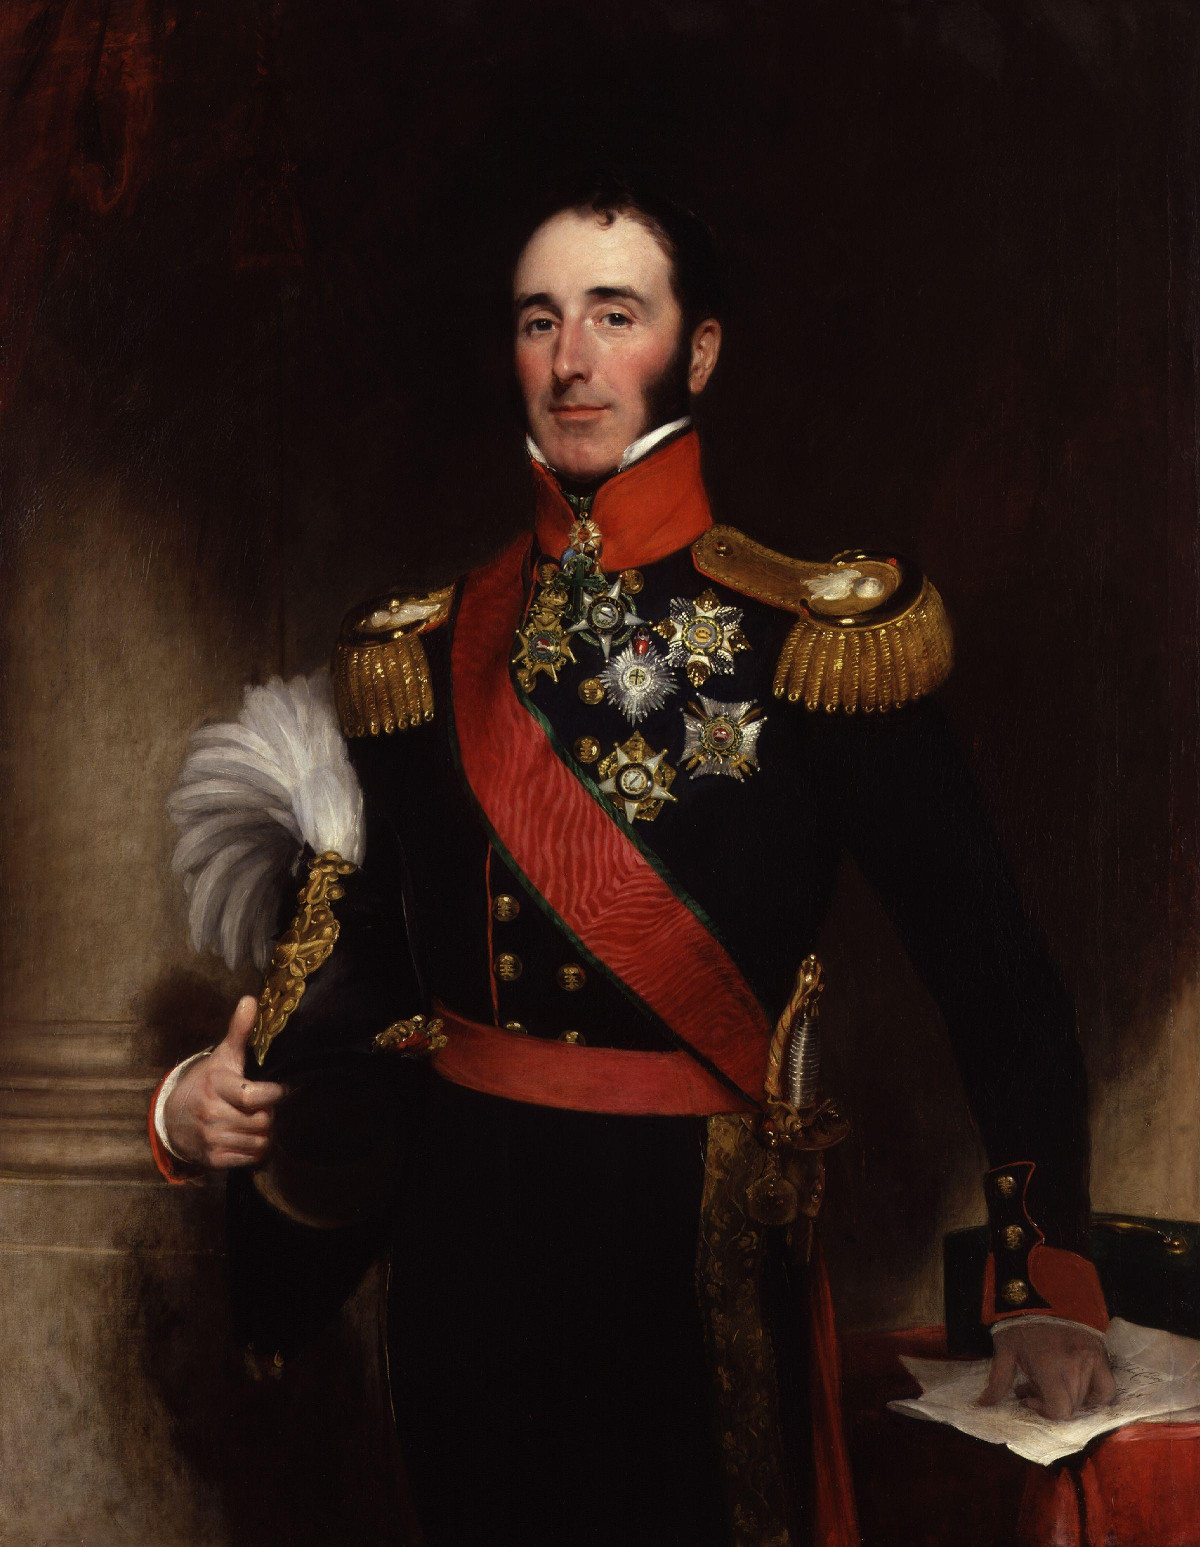 Sir John Ponsonby Conroy, 1st Baronet by Henry William Pickersgill, 1837